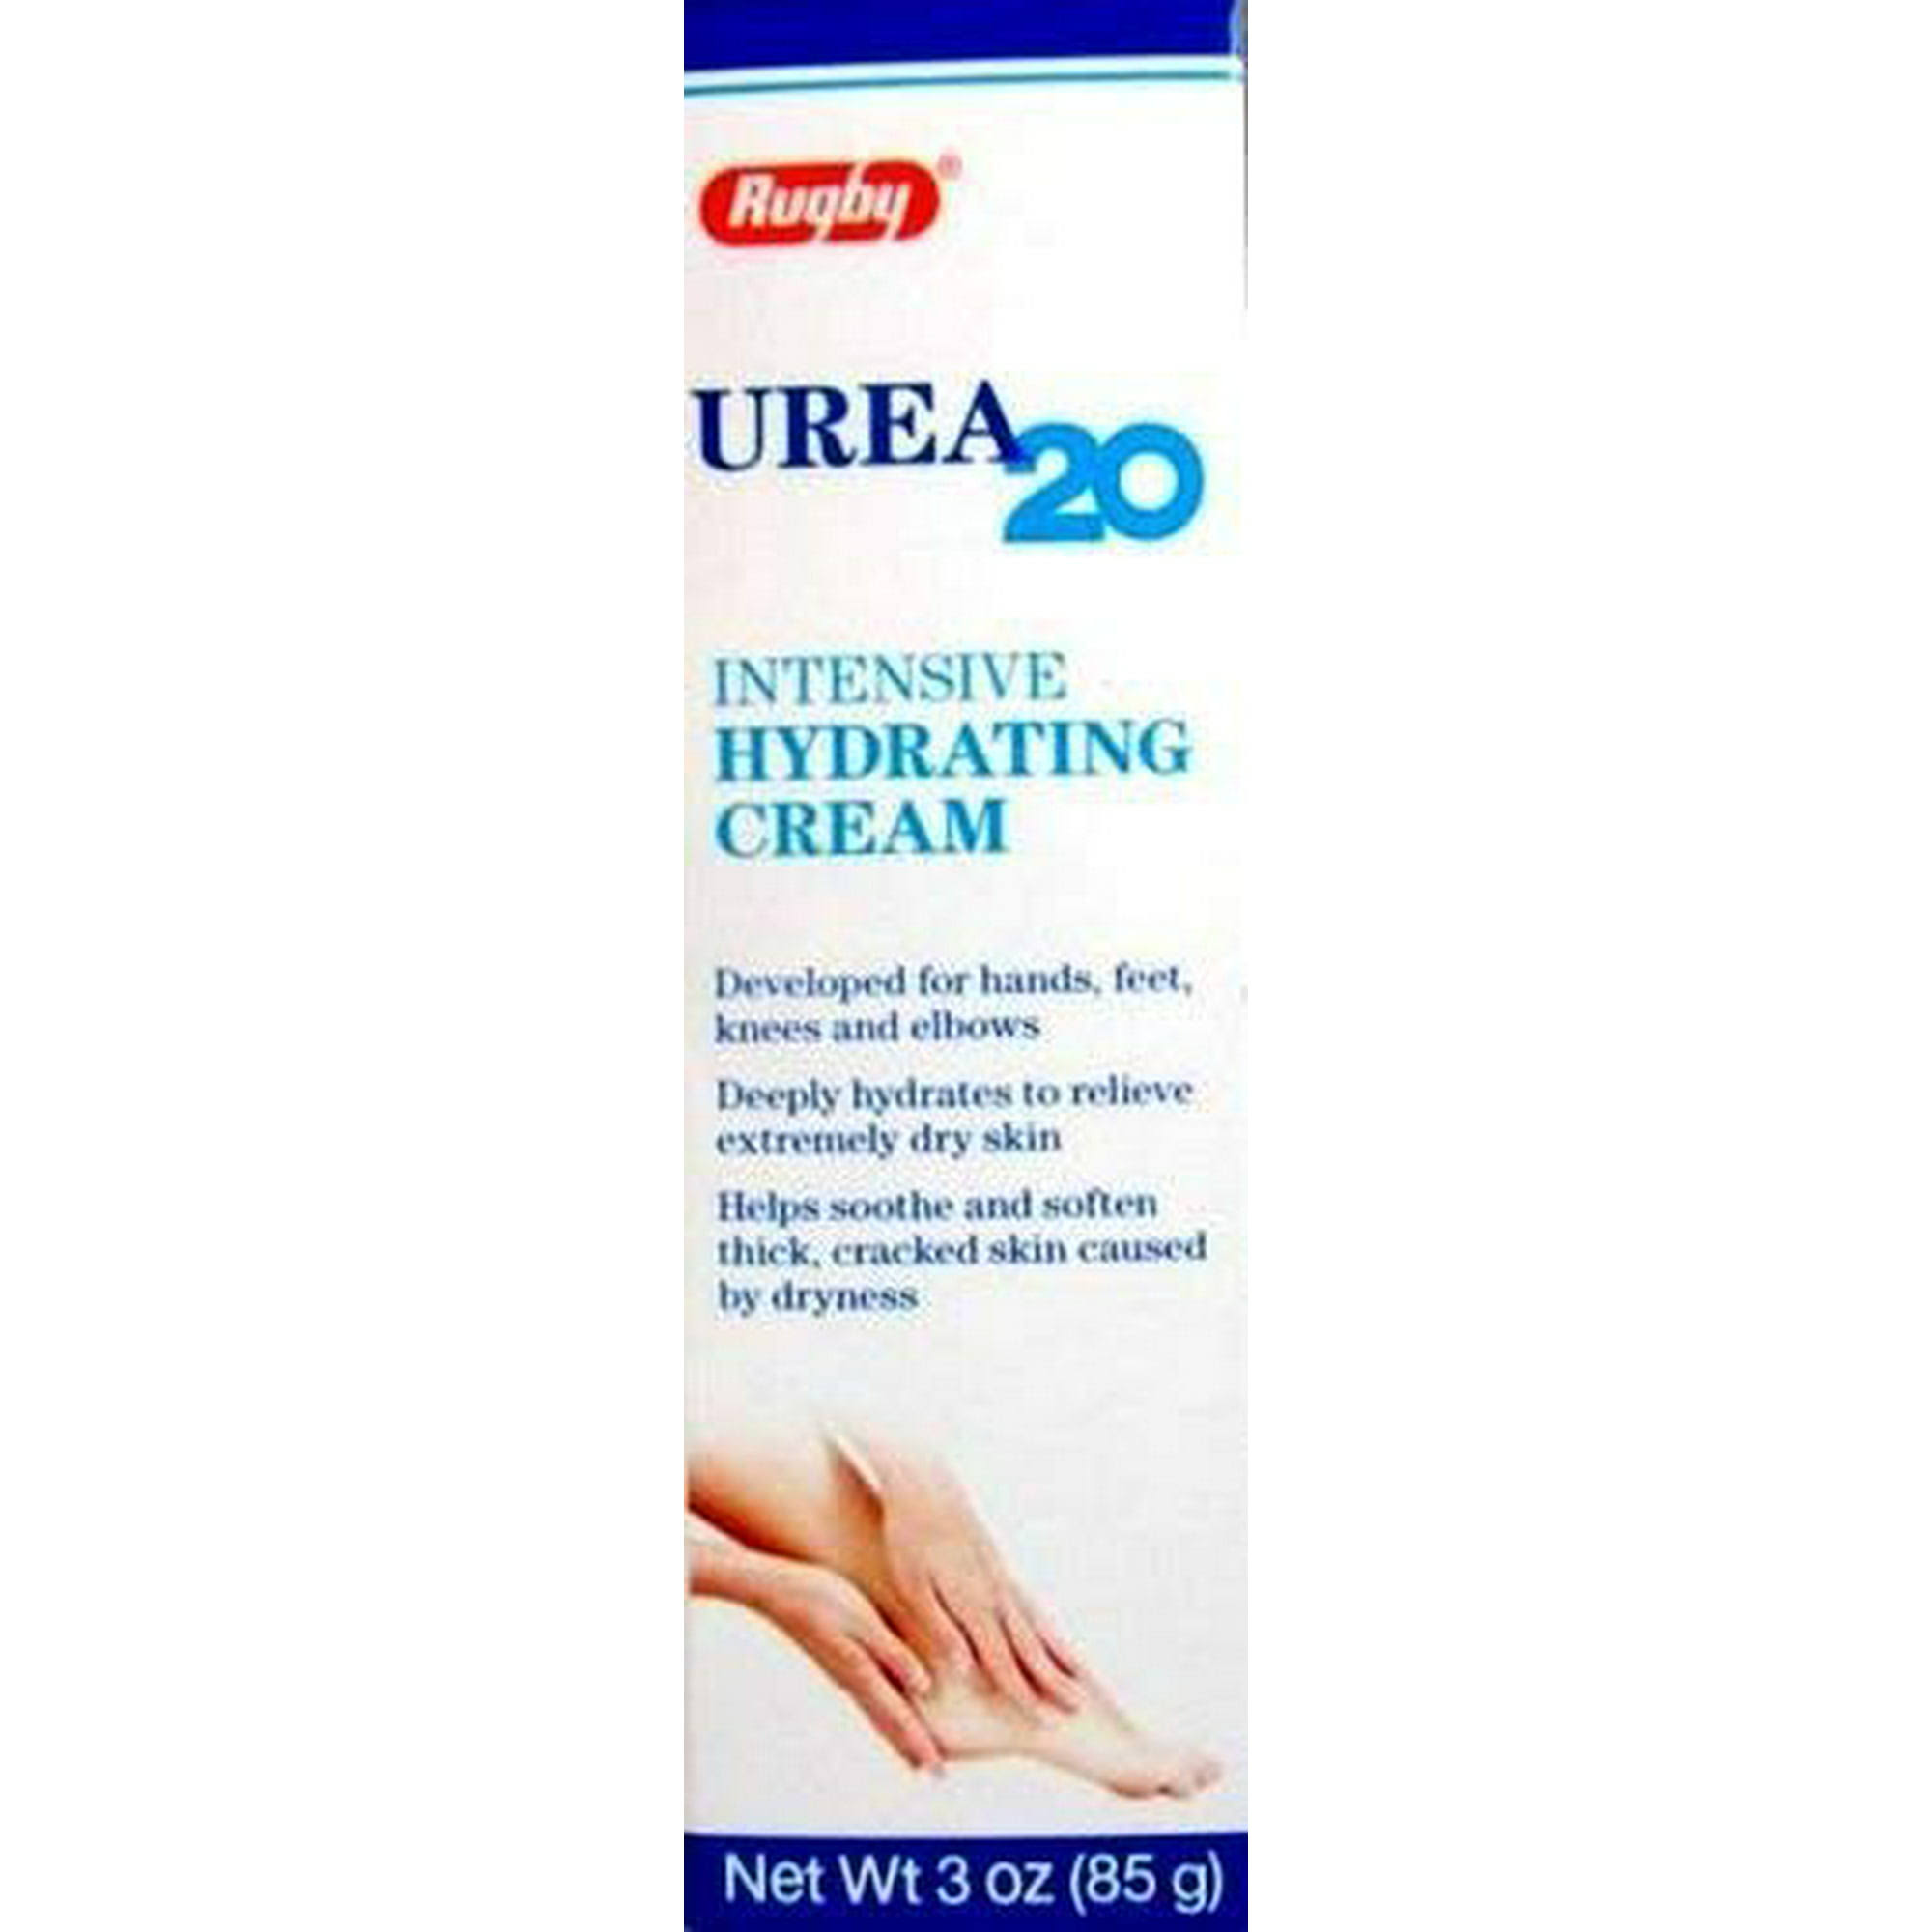 Rugby Urea 20 Intensive Hydrating Cream - 3oz